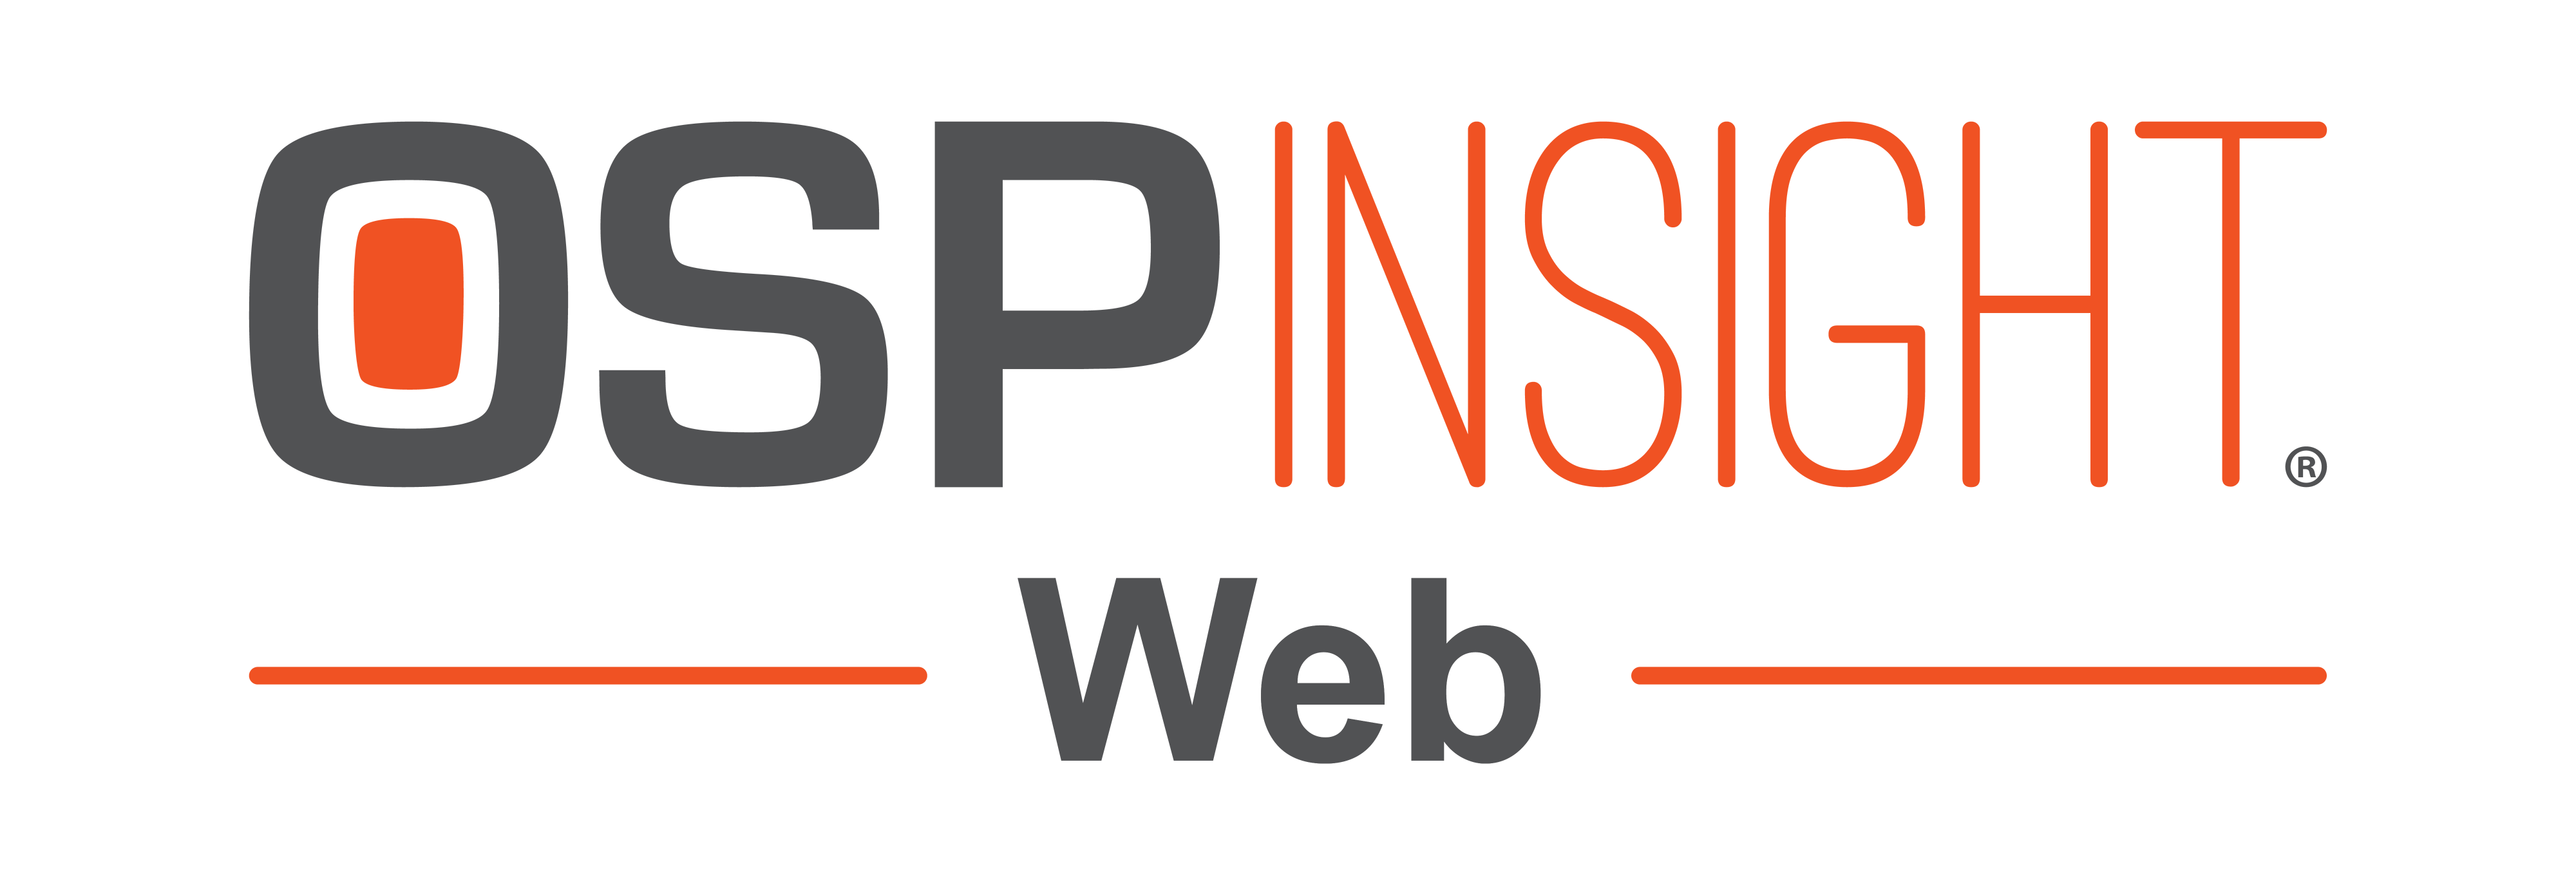 OSPInsight Web - Logo-01